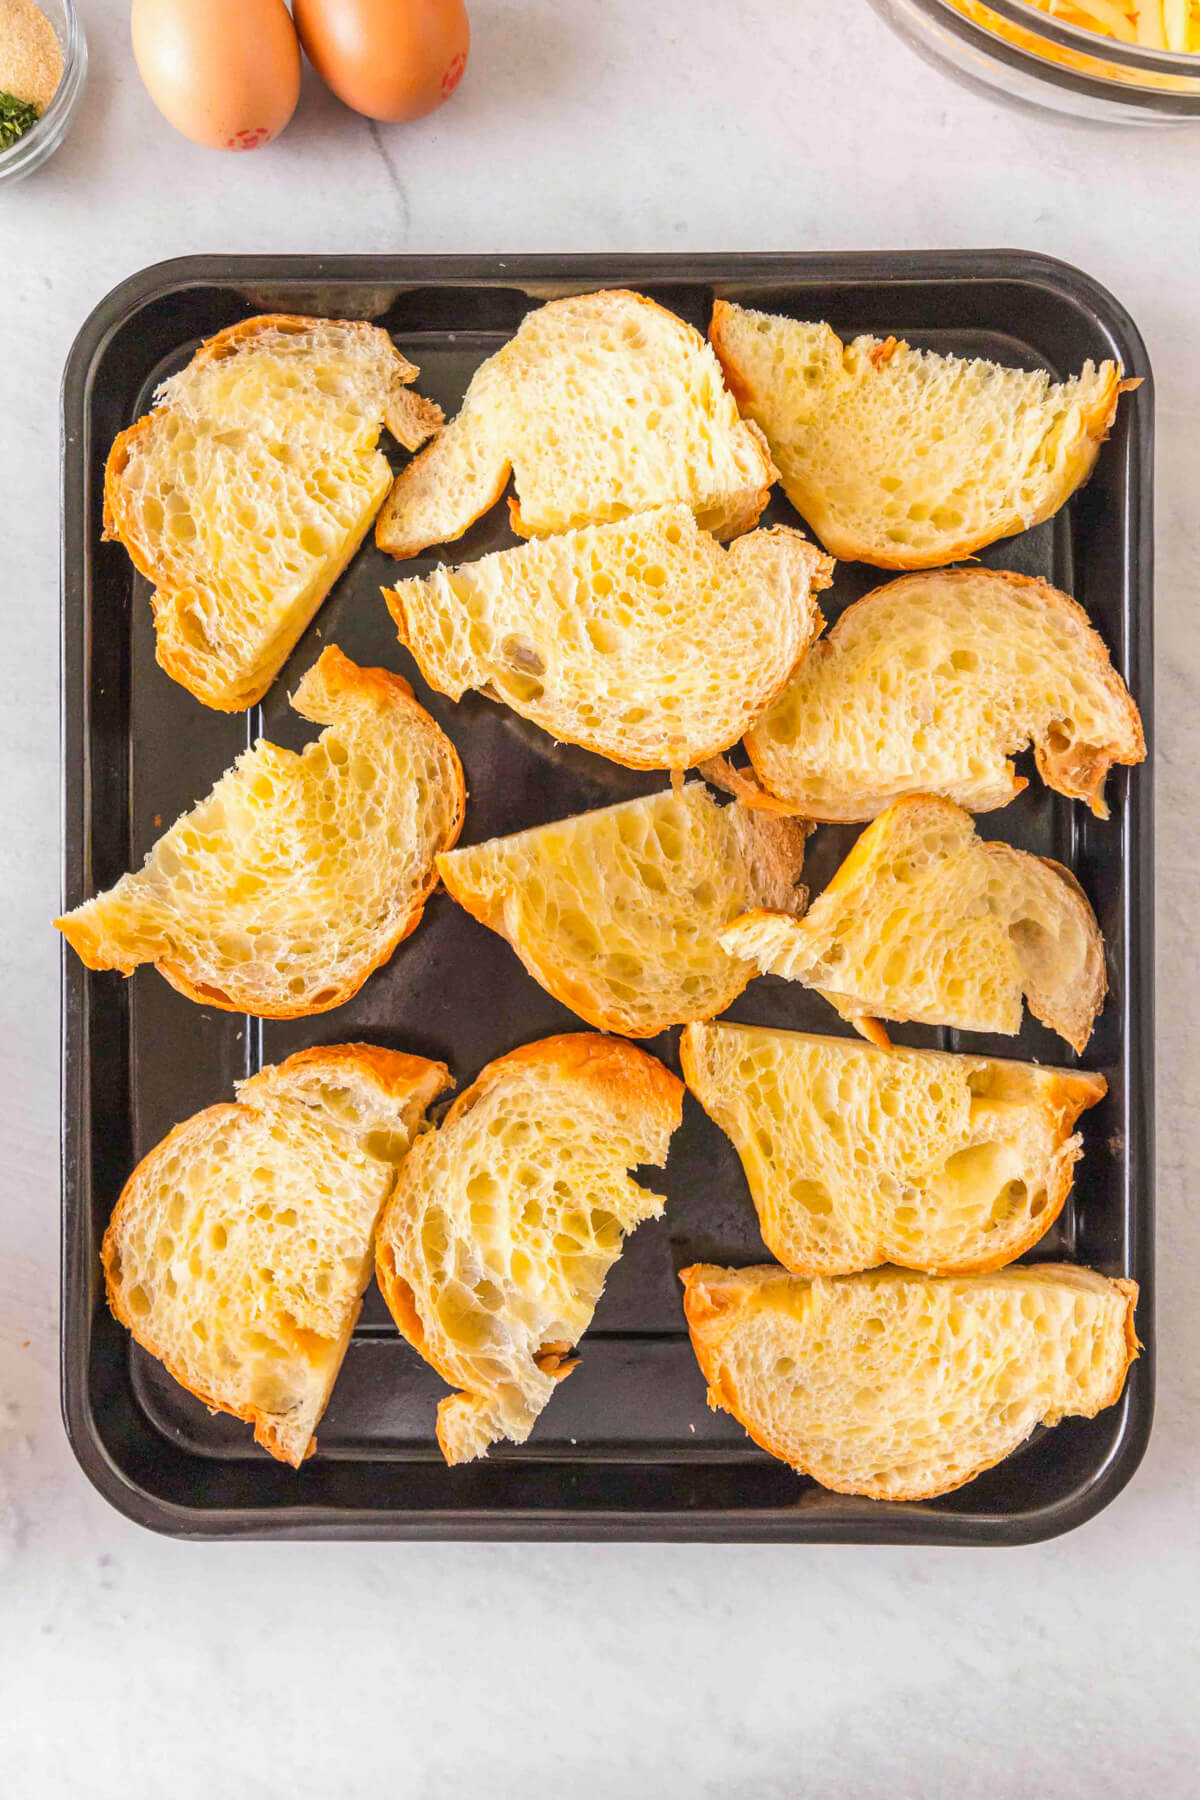 Sliced croissants on a baking sheet.